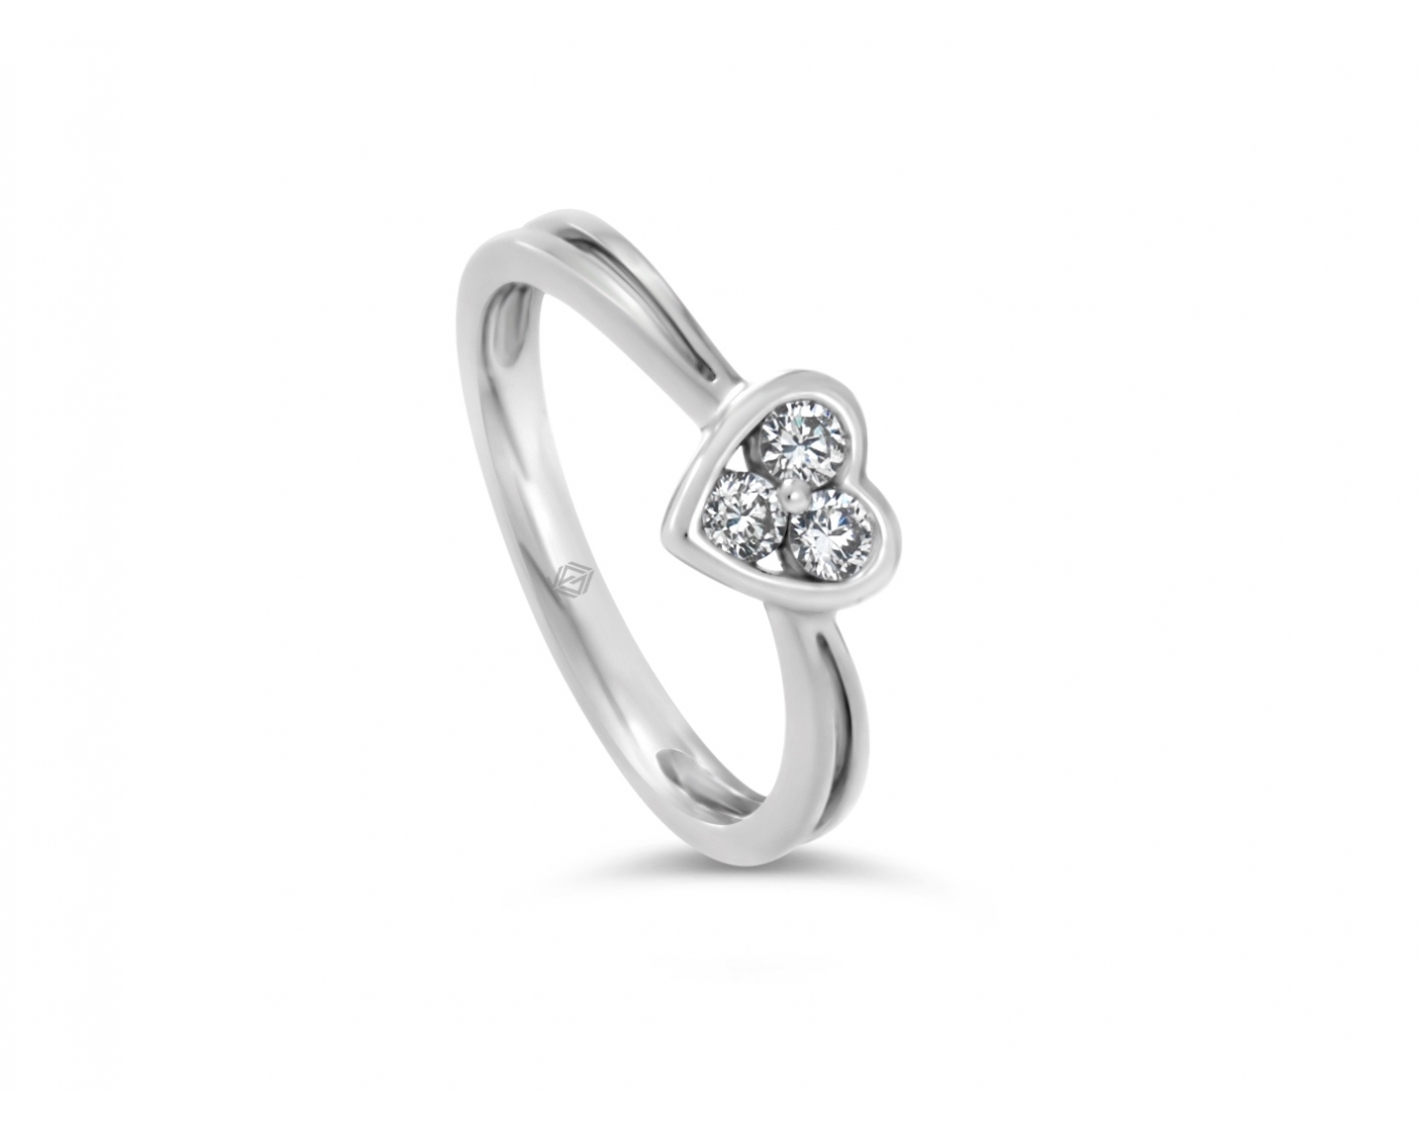 18k rose gold bicolor heart shaped illusion set engagement ring in bezel set Photos & images